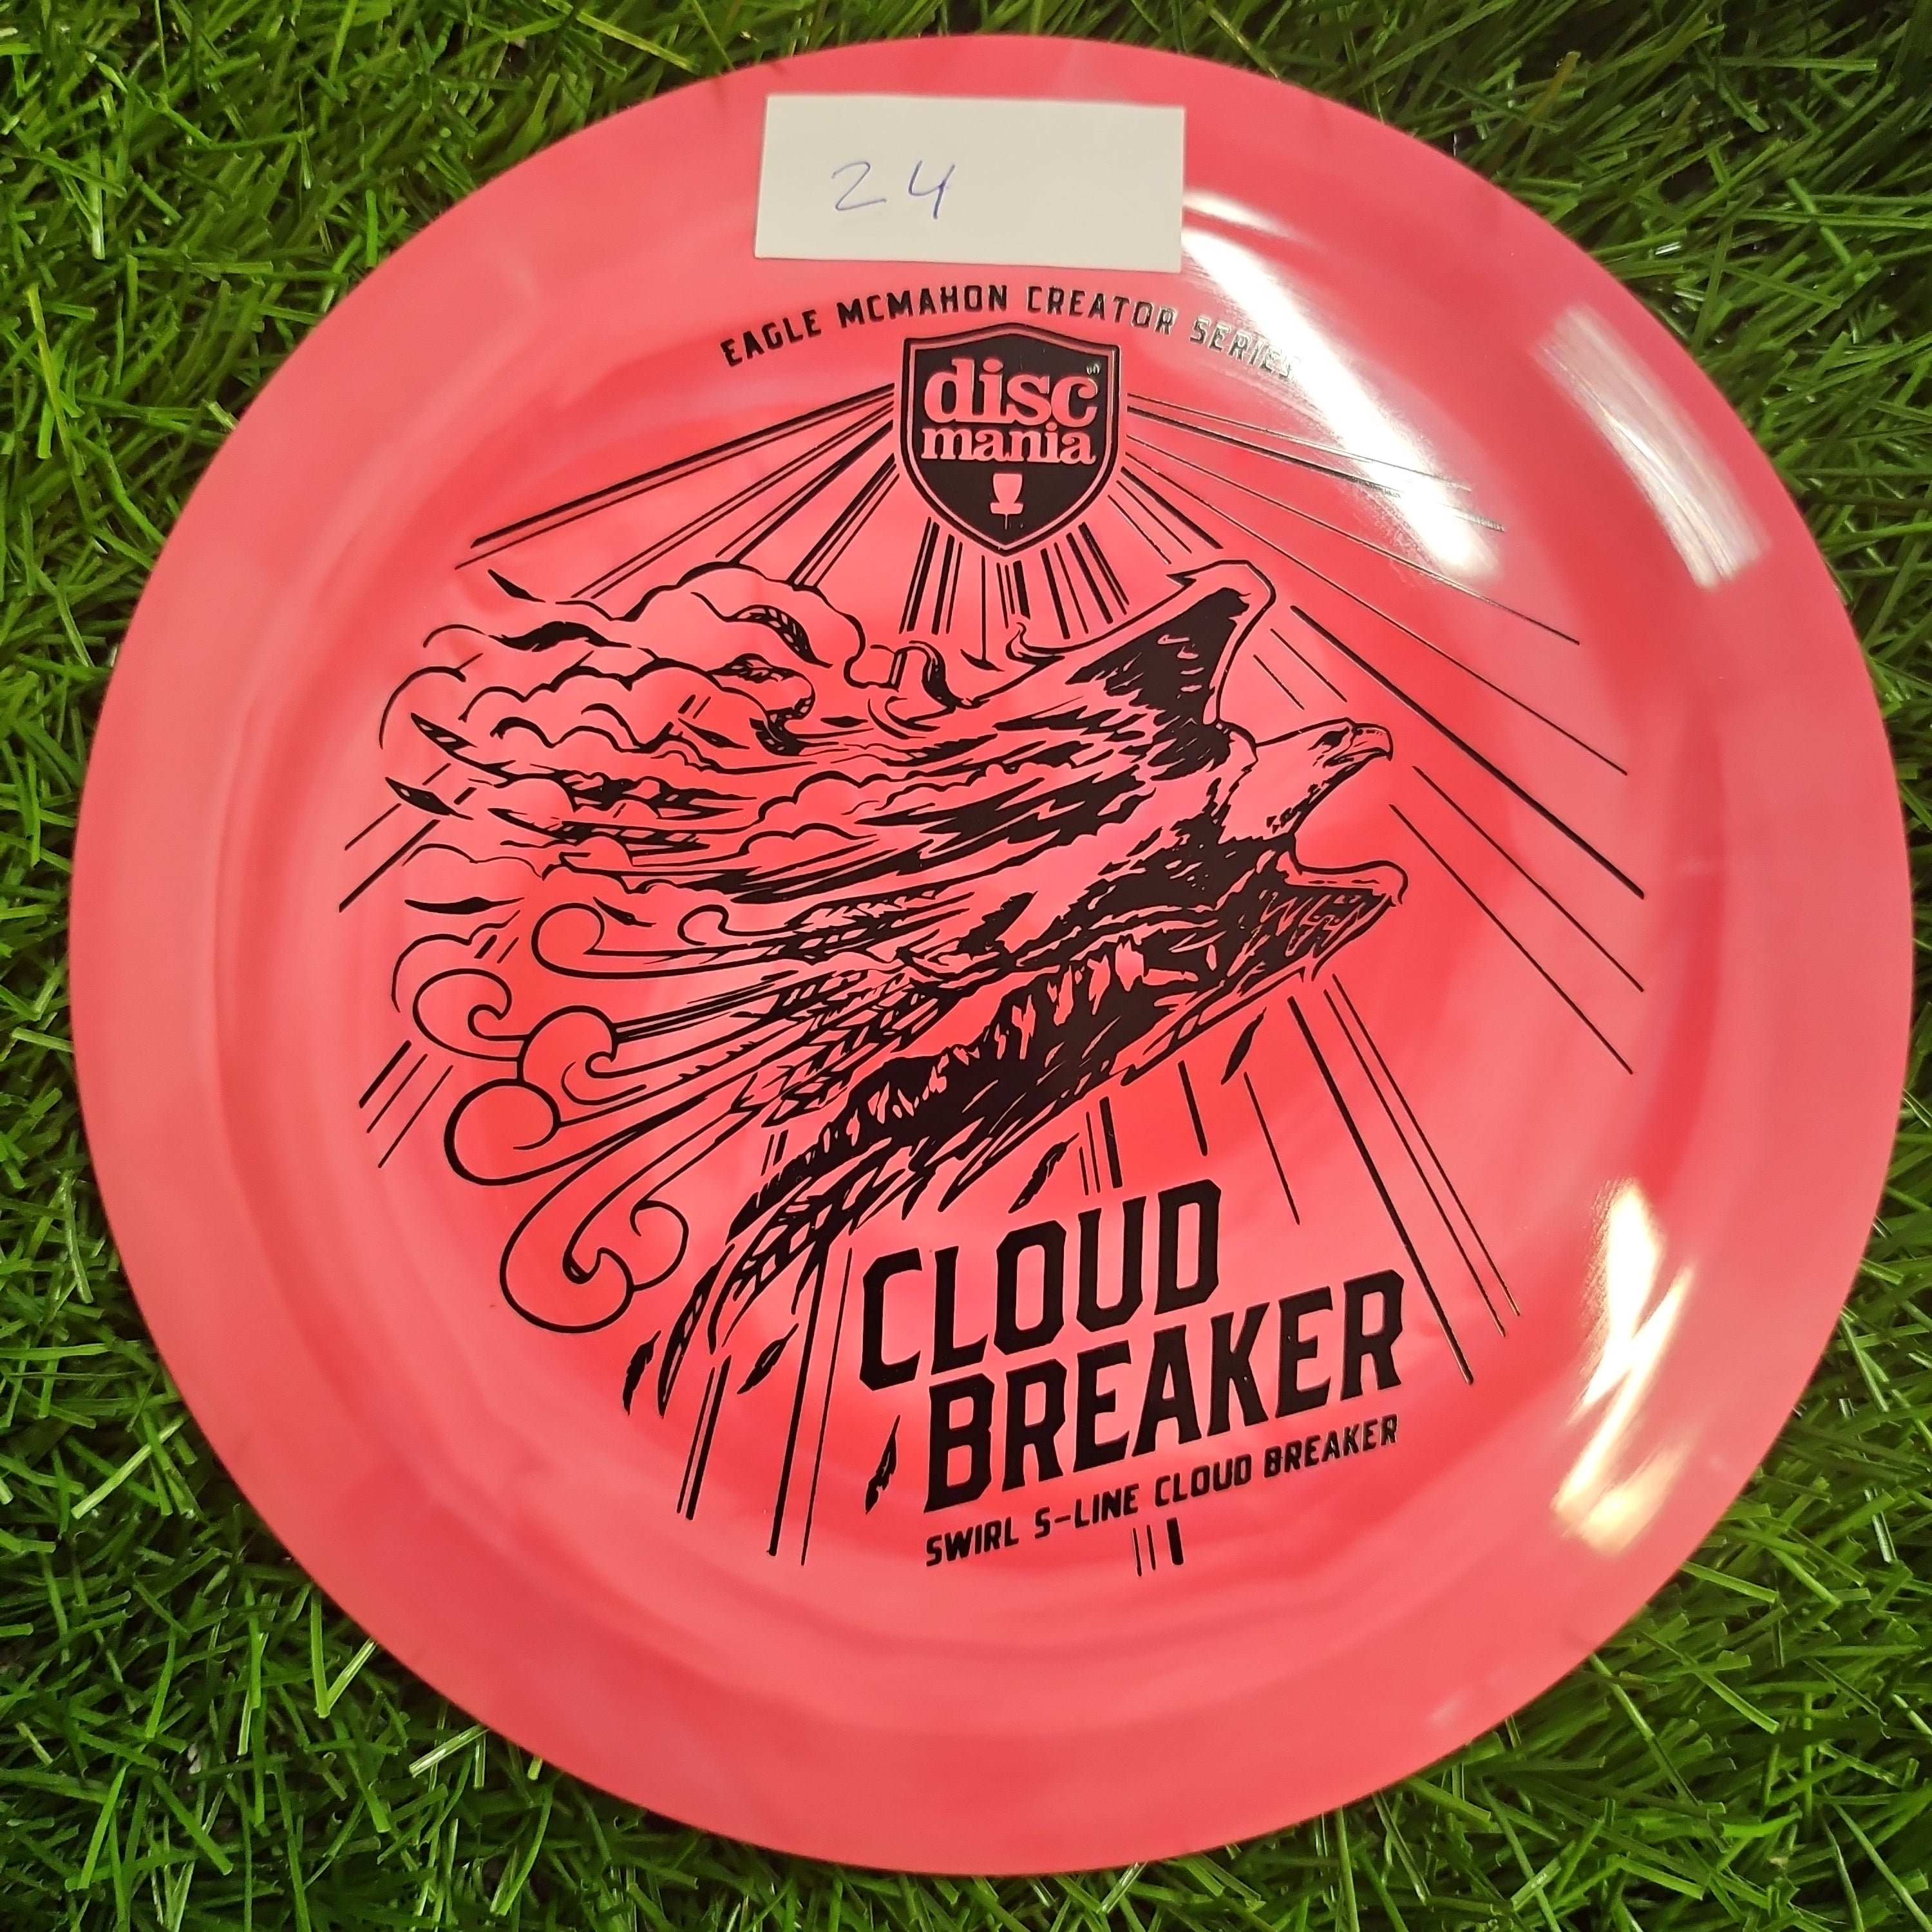 Swirl S-line Cloud Breaker - Eagle McMahon Creator Series